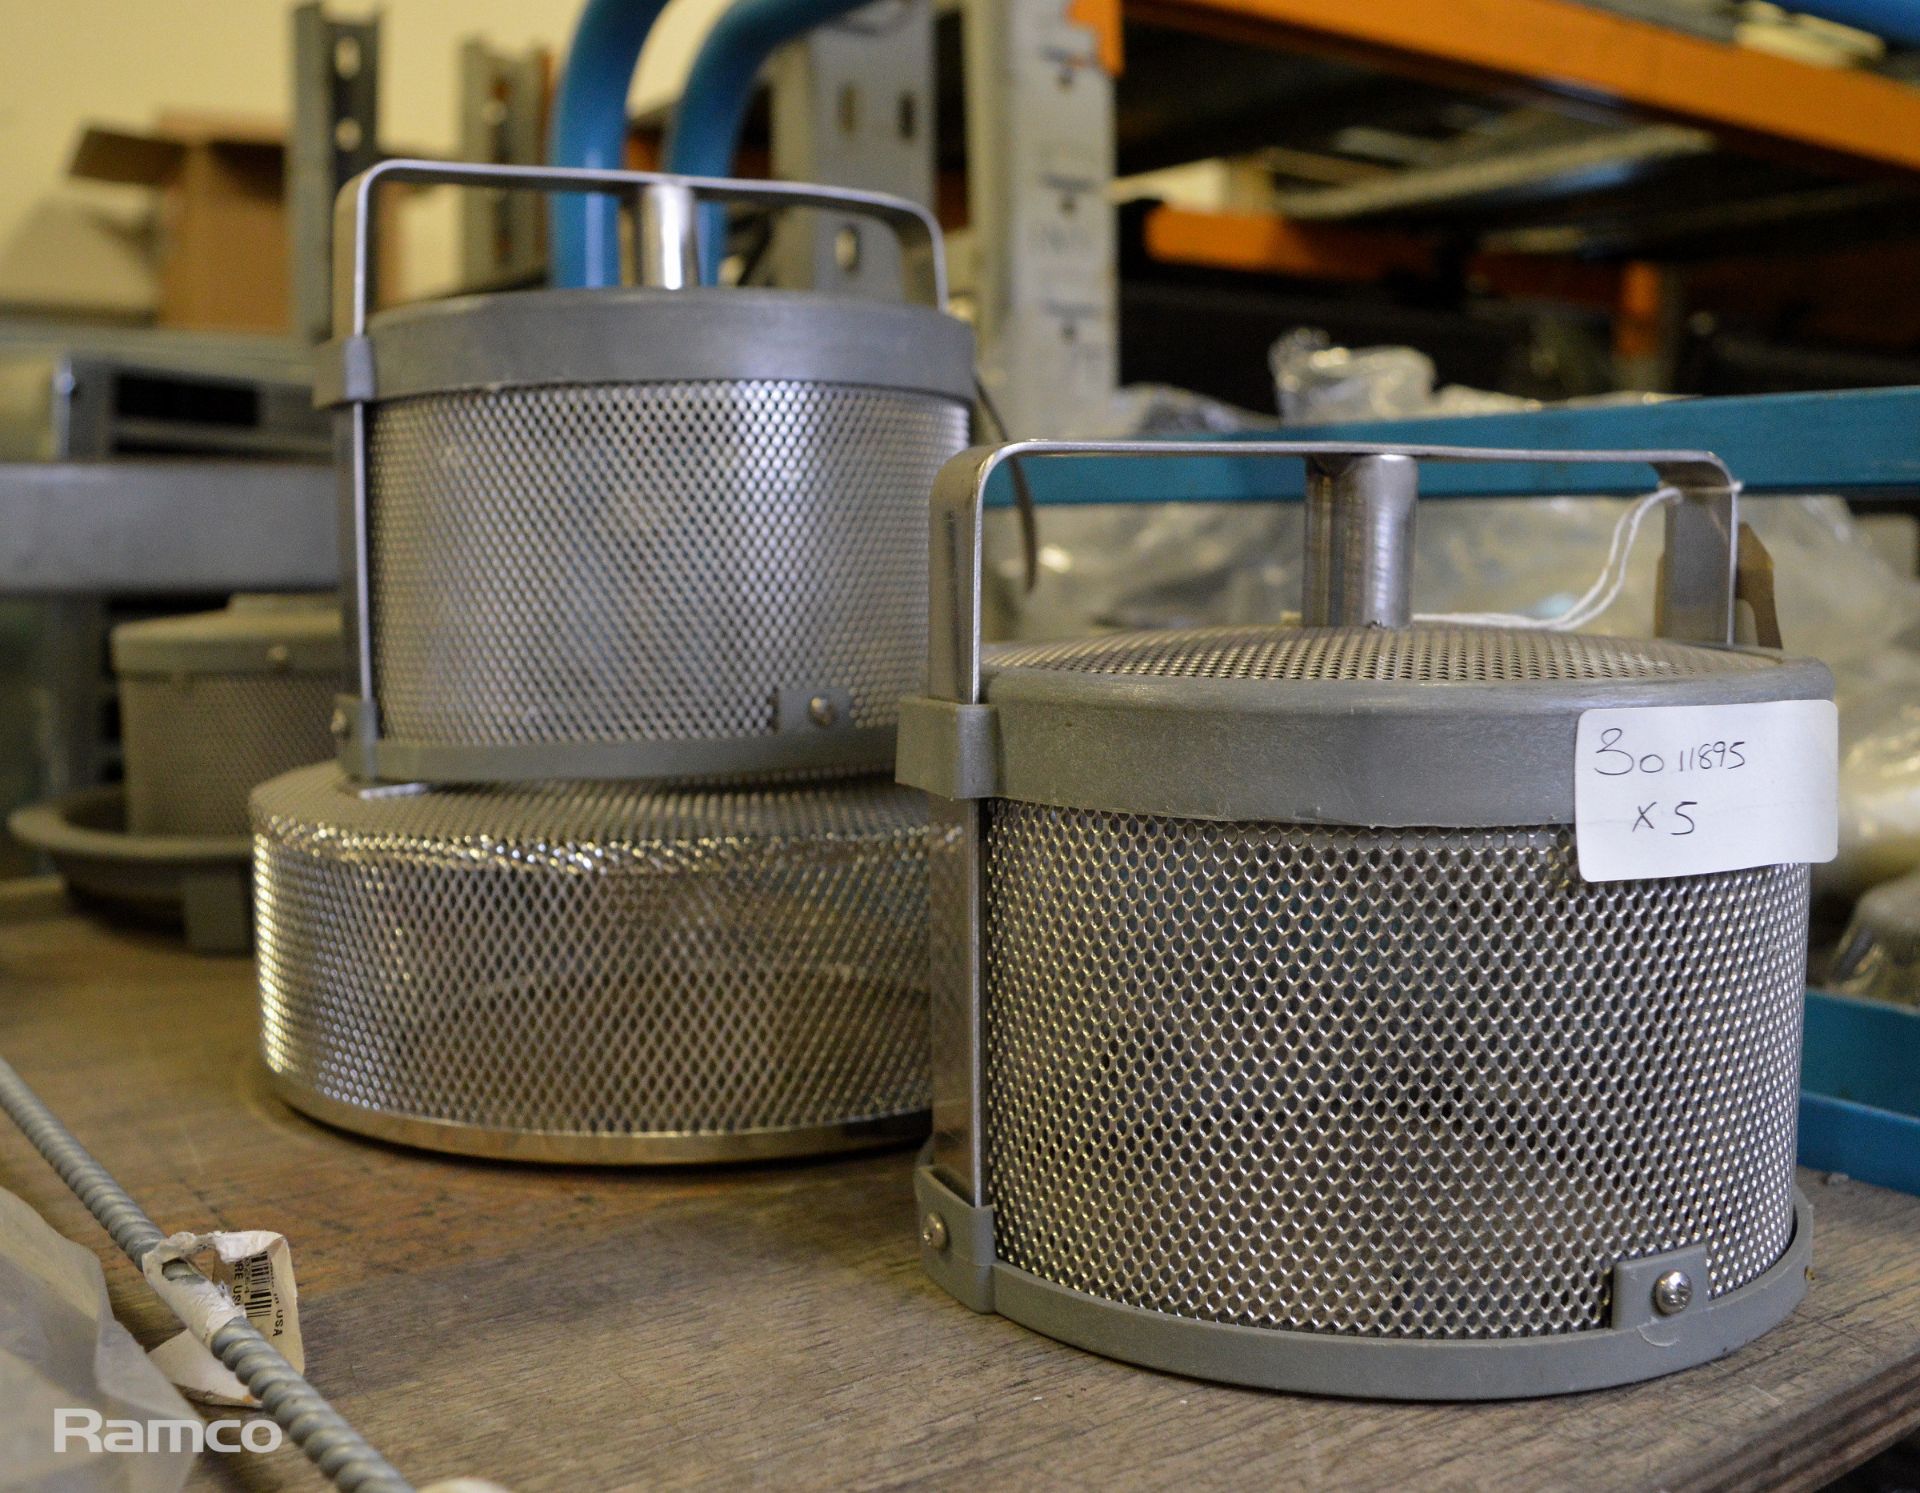 Various Wash Tank Filters, 2x Calpeda Idromat Electronic Regulator for Pumps 230V 50/60Hz - Image 5 of 6